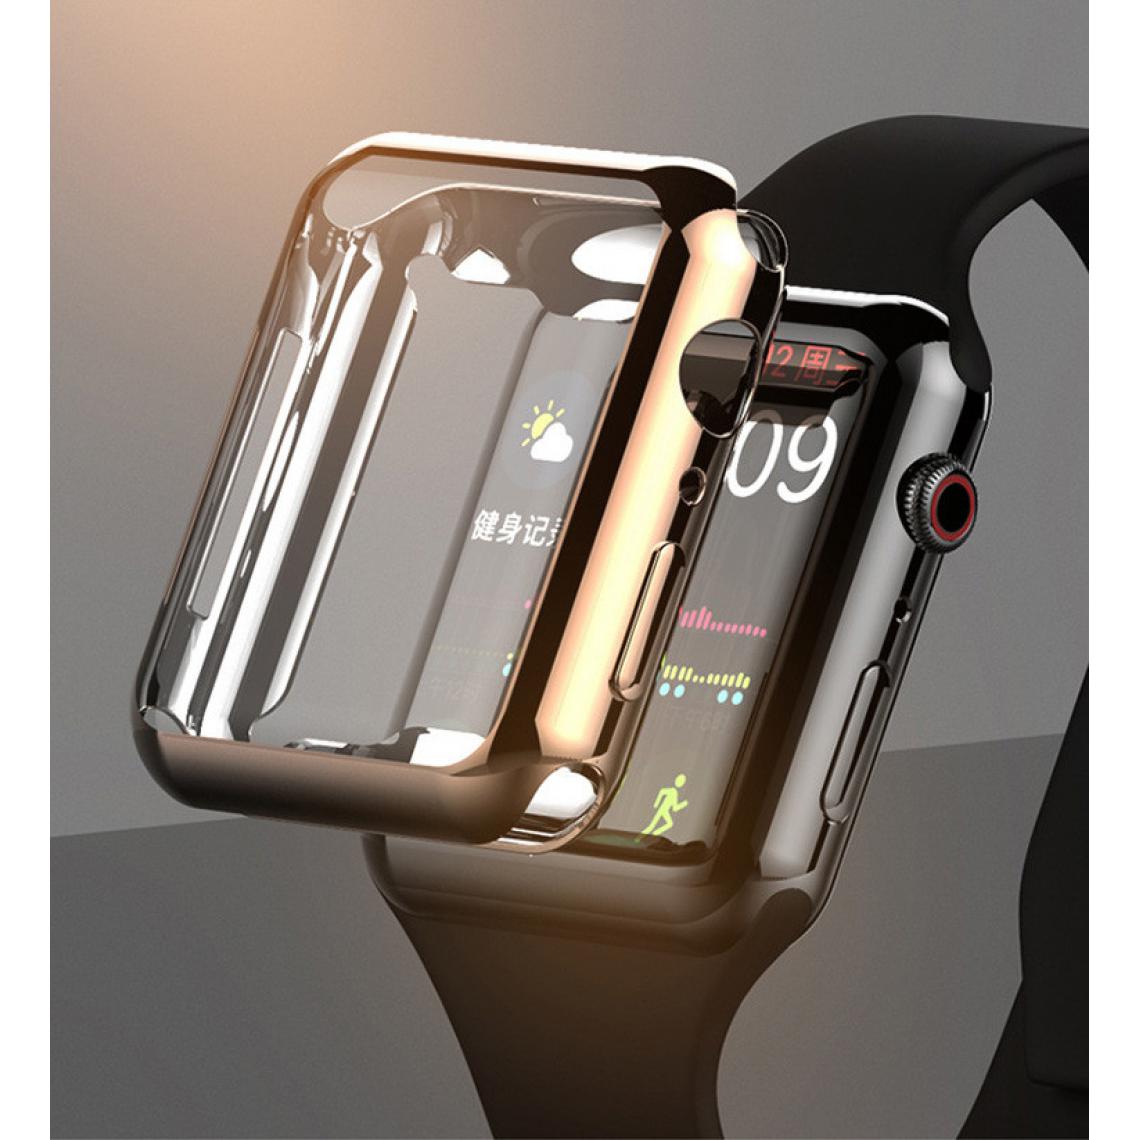 Shot - Coque Silicone 42mm pour IWATCH Serie 2 APPLE Bumper Protection Tactile (OR) - Accessoires montres connectées